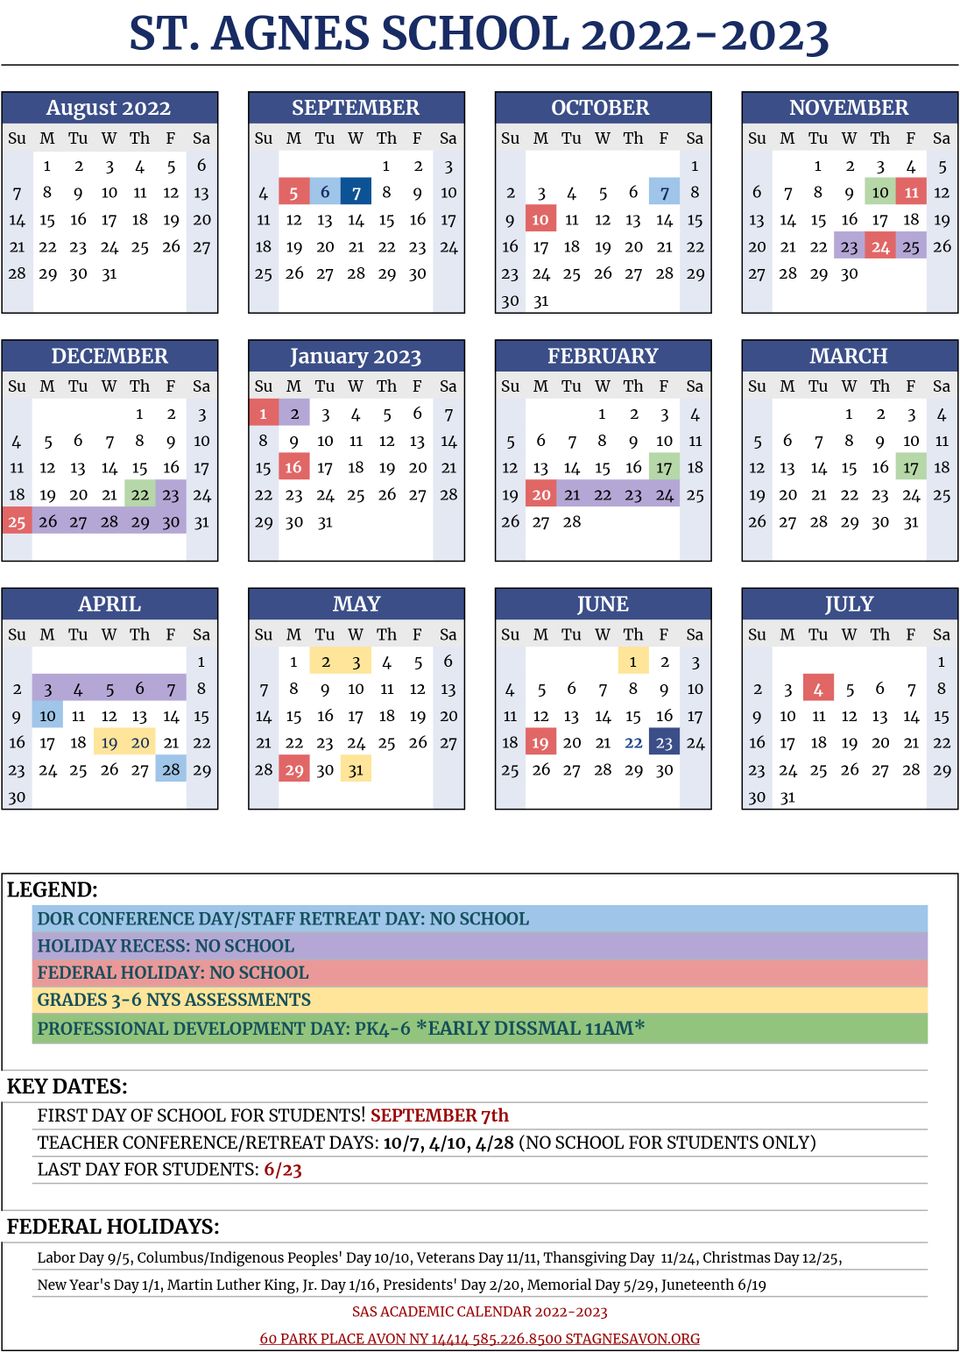 Dor 22 23 sas academic calendar